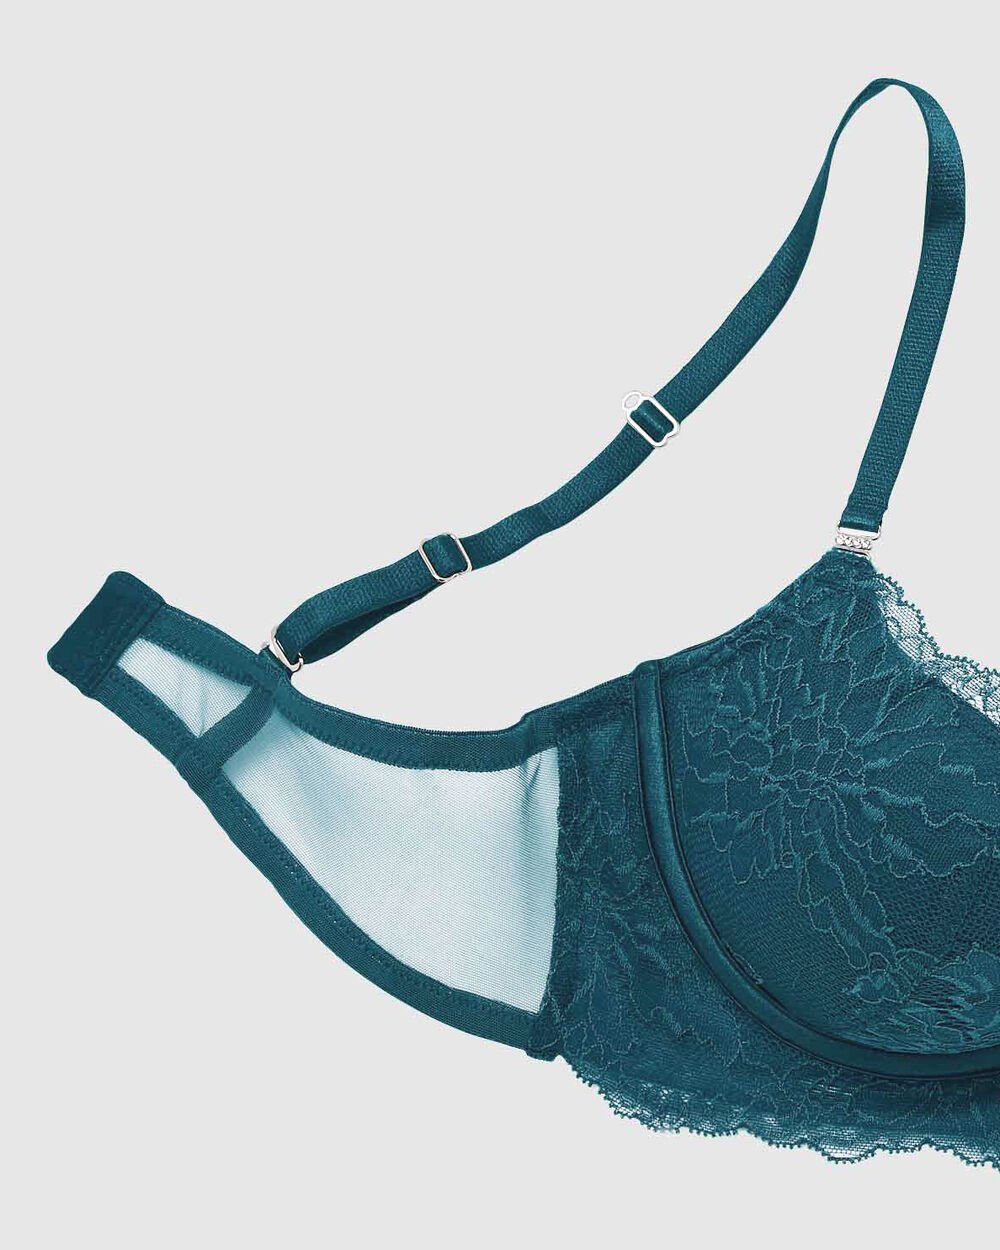 Wholesale push up bra gel padded bra For Supportive Underwear 